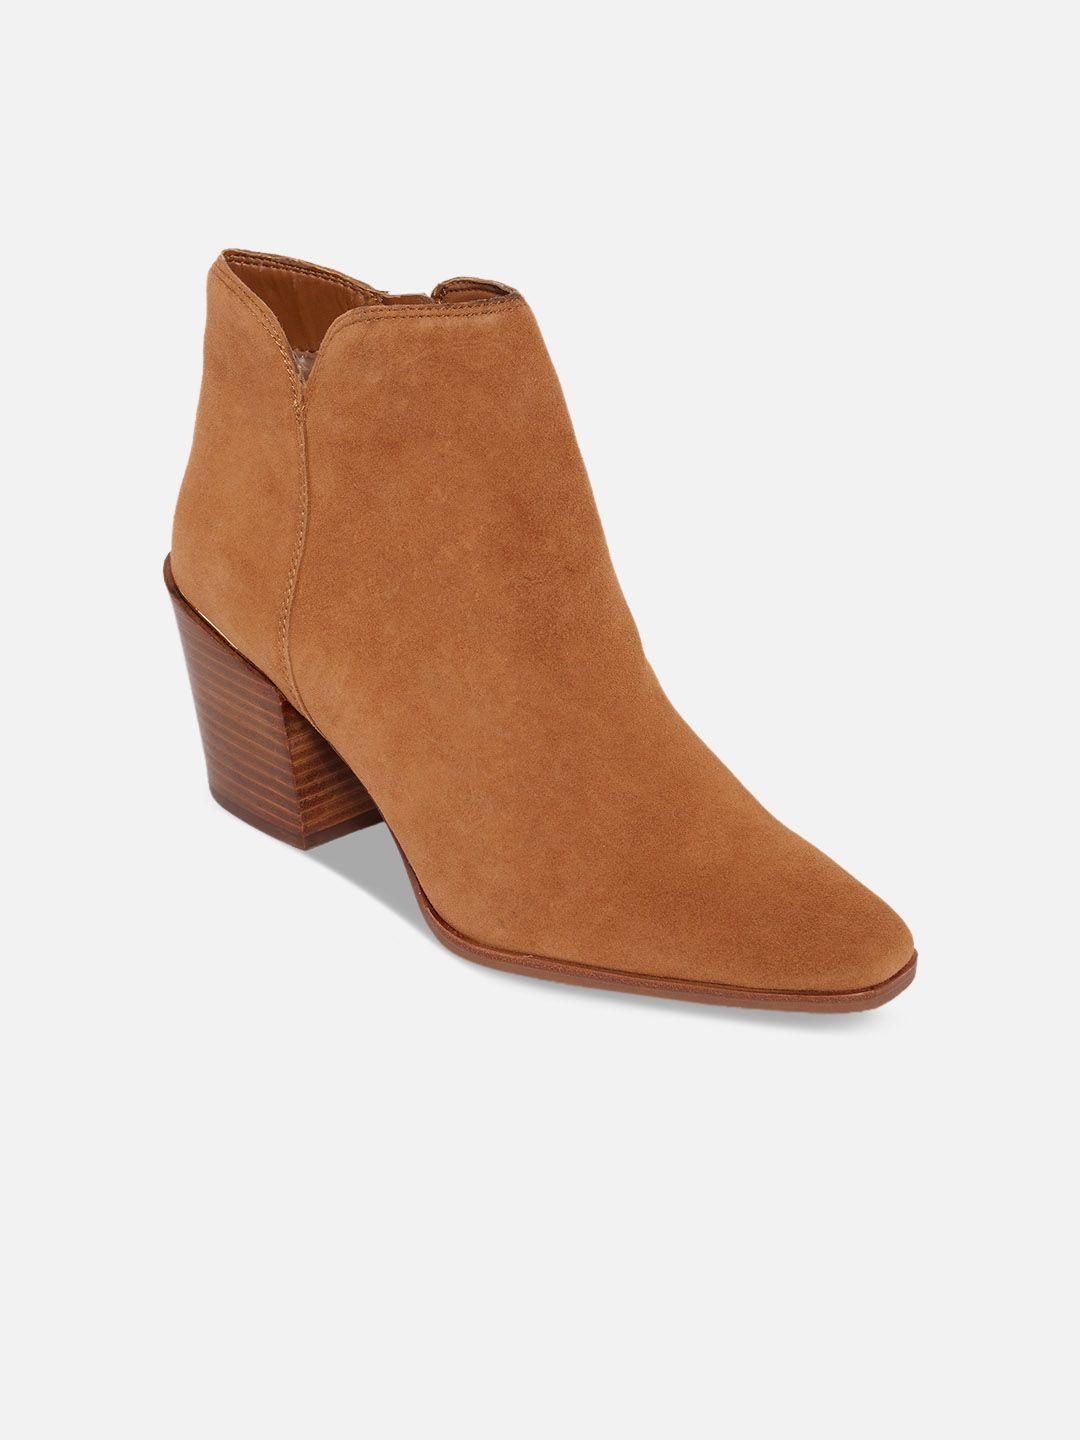 aldo-women-brown-leather-flat-boots